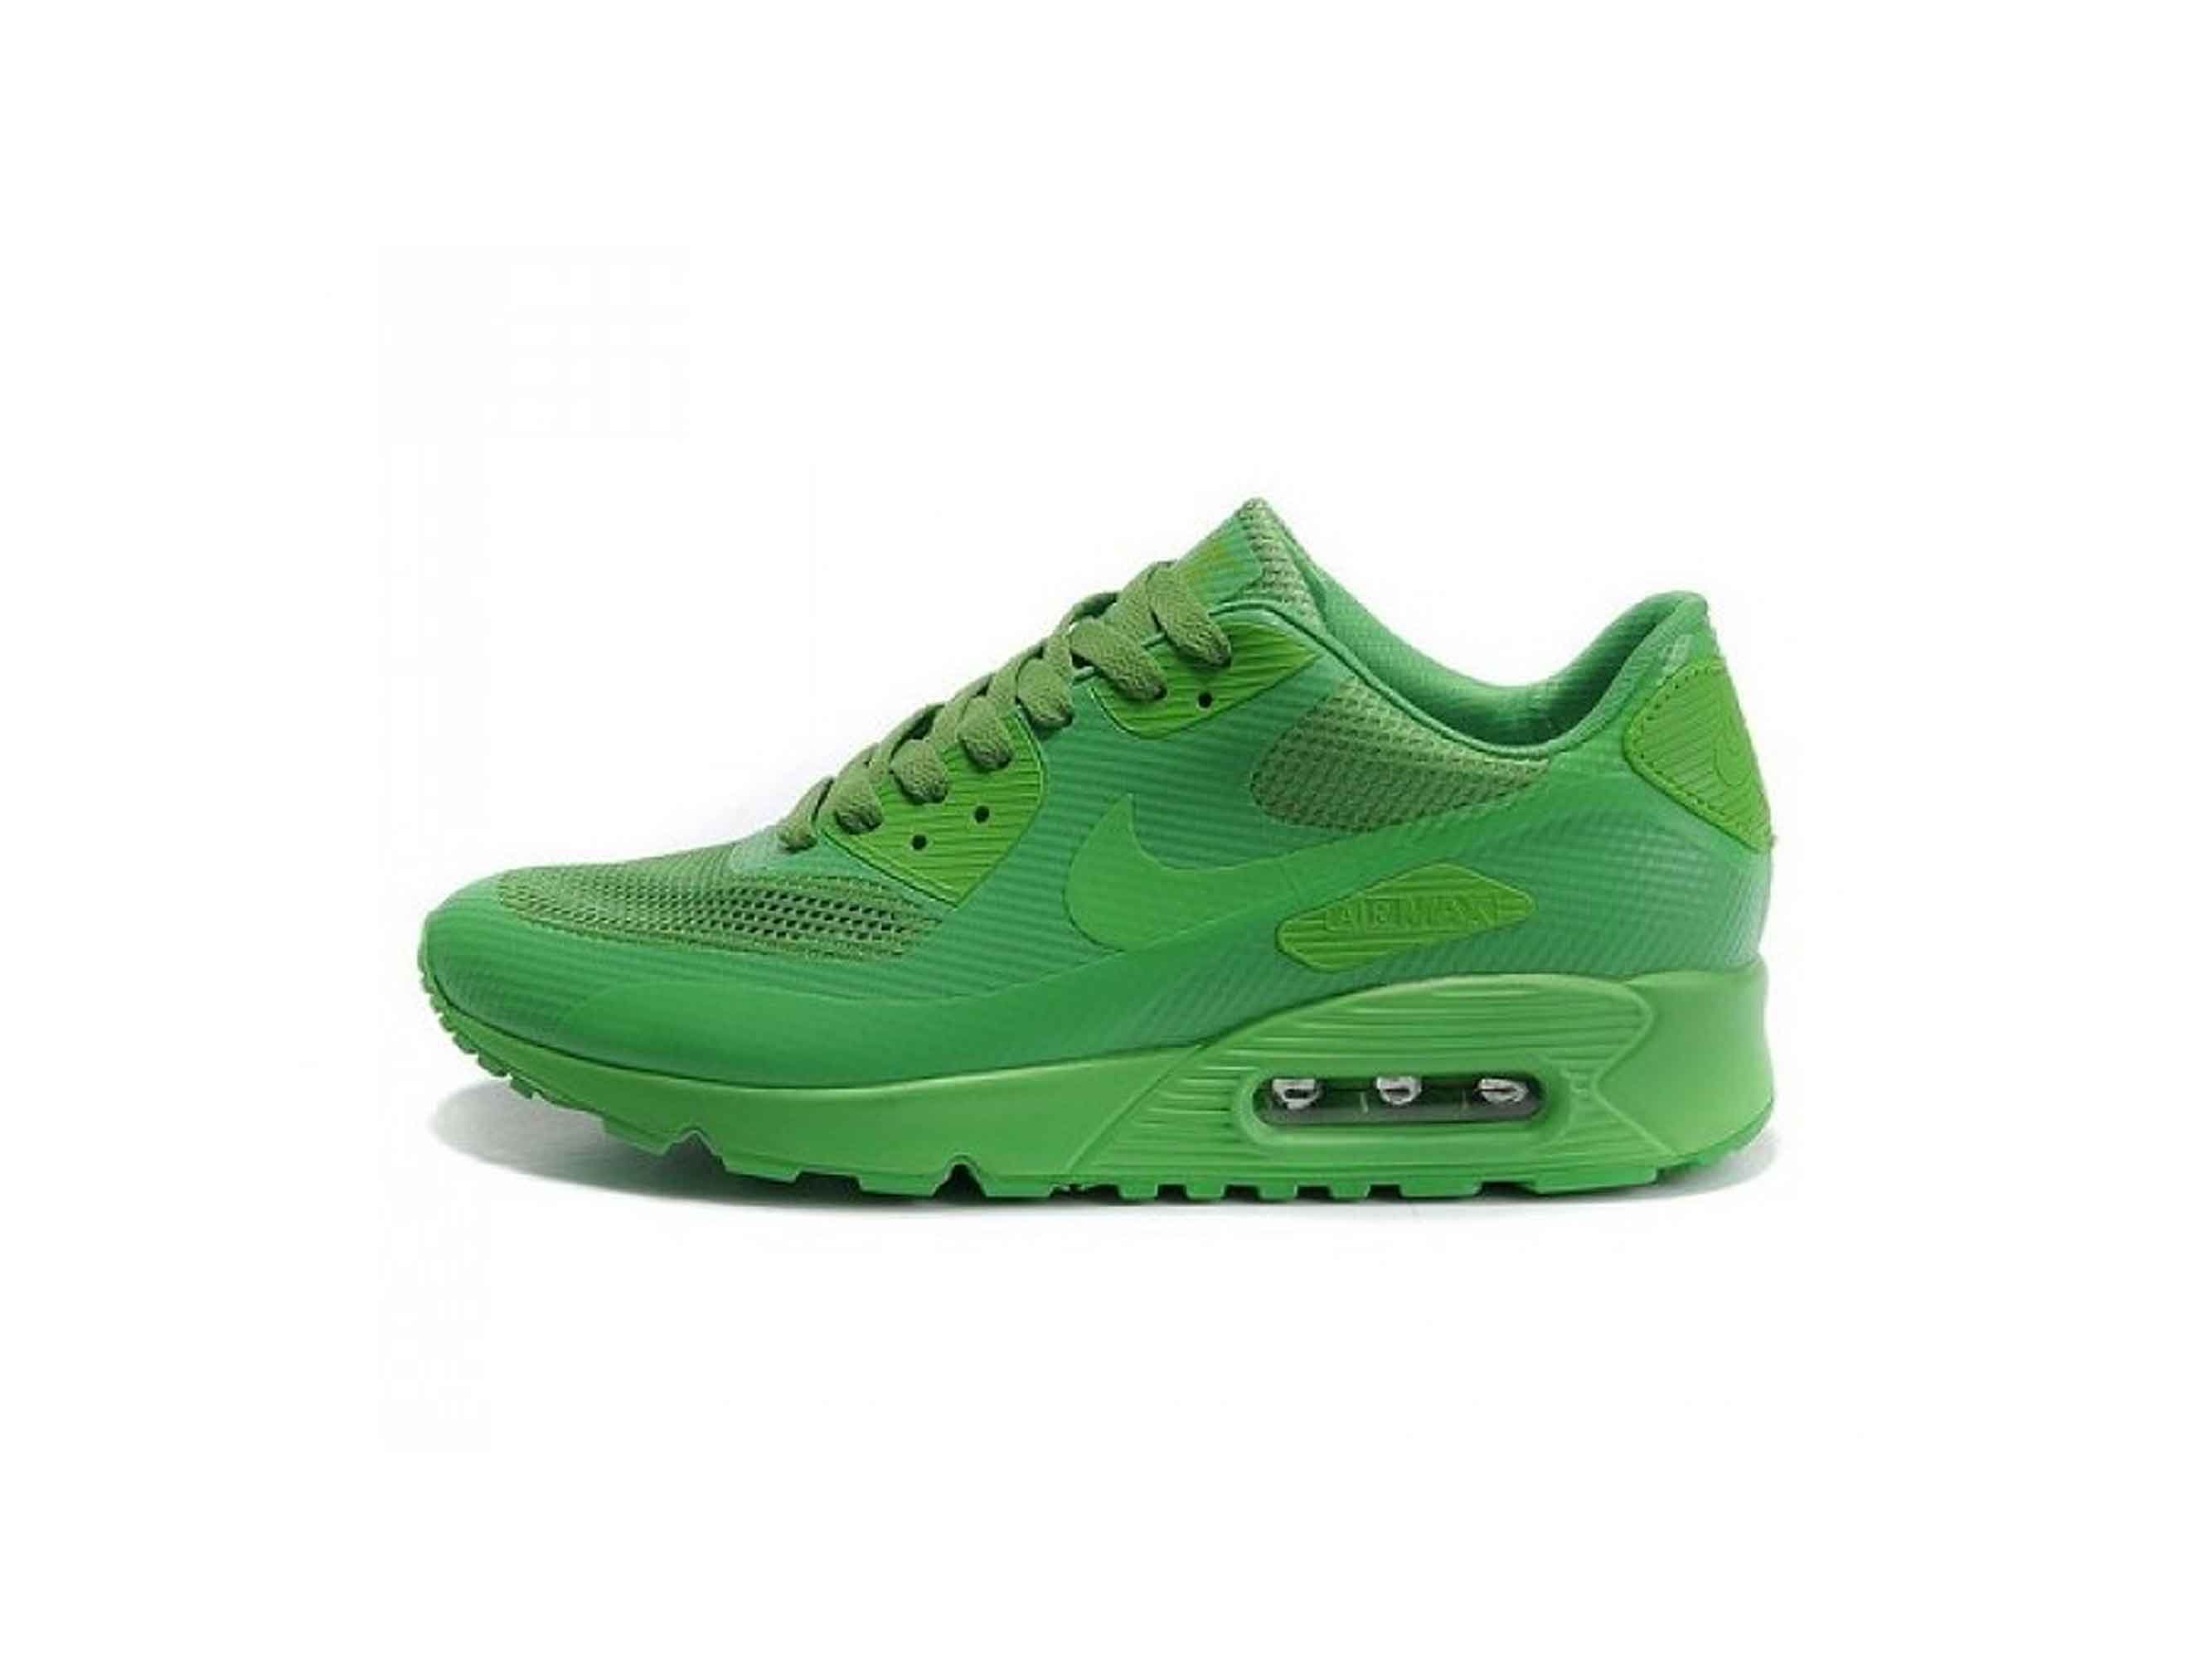 Кроссовки nike green. Nike-Air-Max-90-Hyperfuse-2012-Green. Nike Air Max 90 Hyperfuse Green. Nike Air Max 90 Hyperfuse. Найк АИР Макс 90 зеленые.